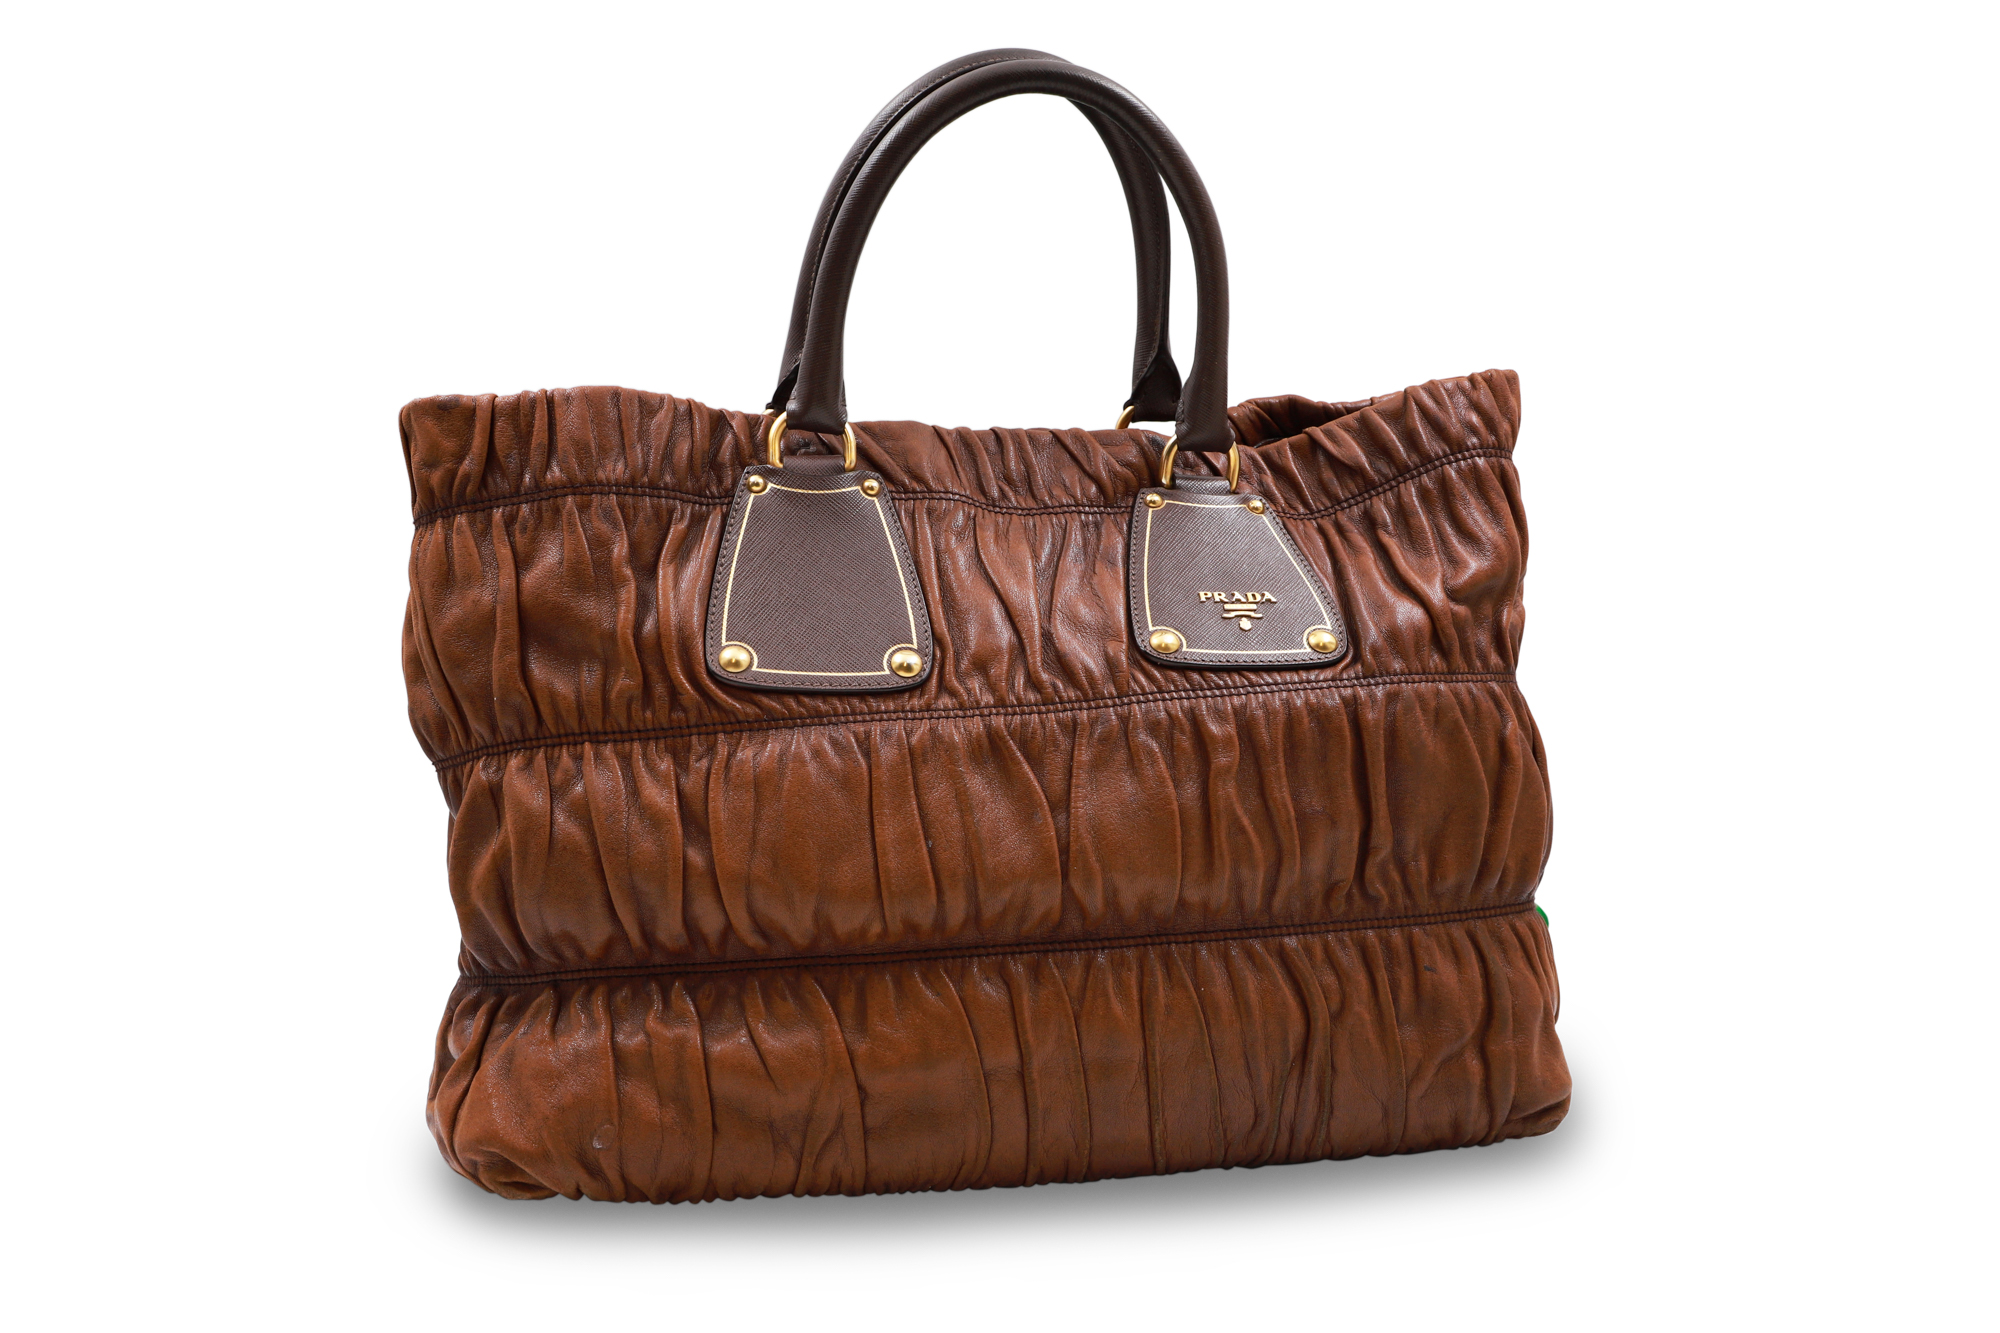 A LADY'S PRADA HANDBAG, brown leather, with dust bag & card